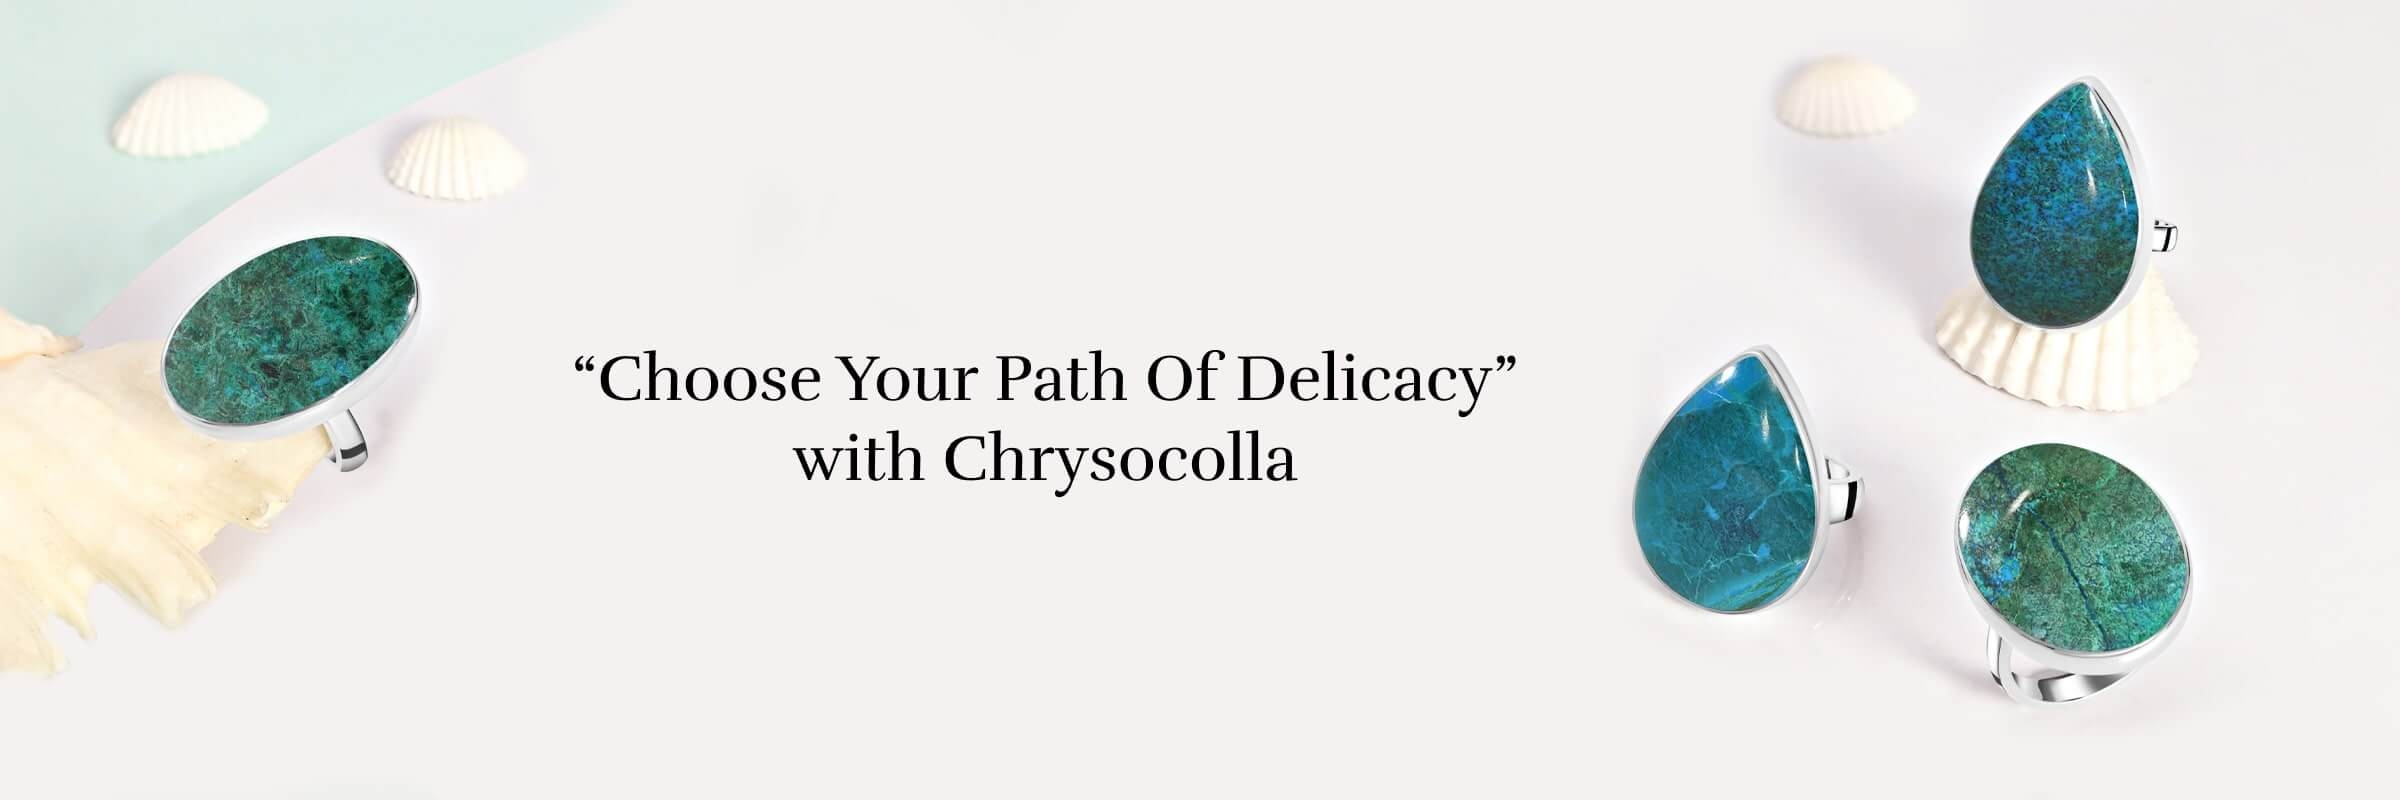 Mental & Emotional Health Benefits of Chrysocolla